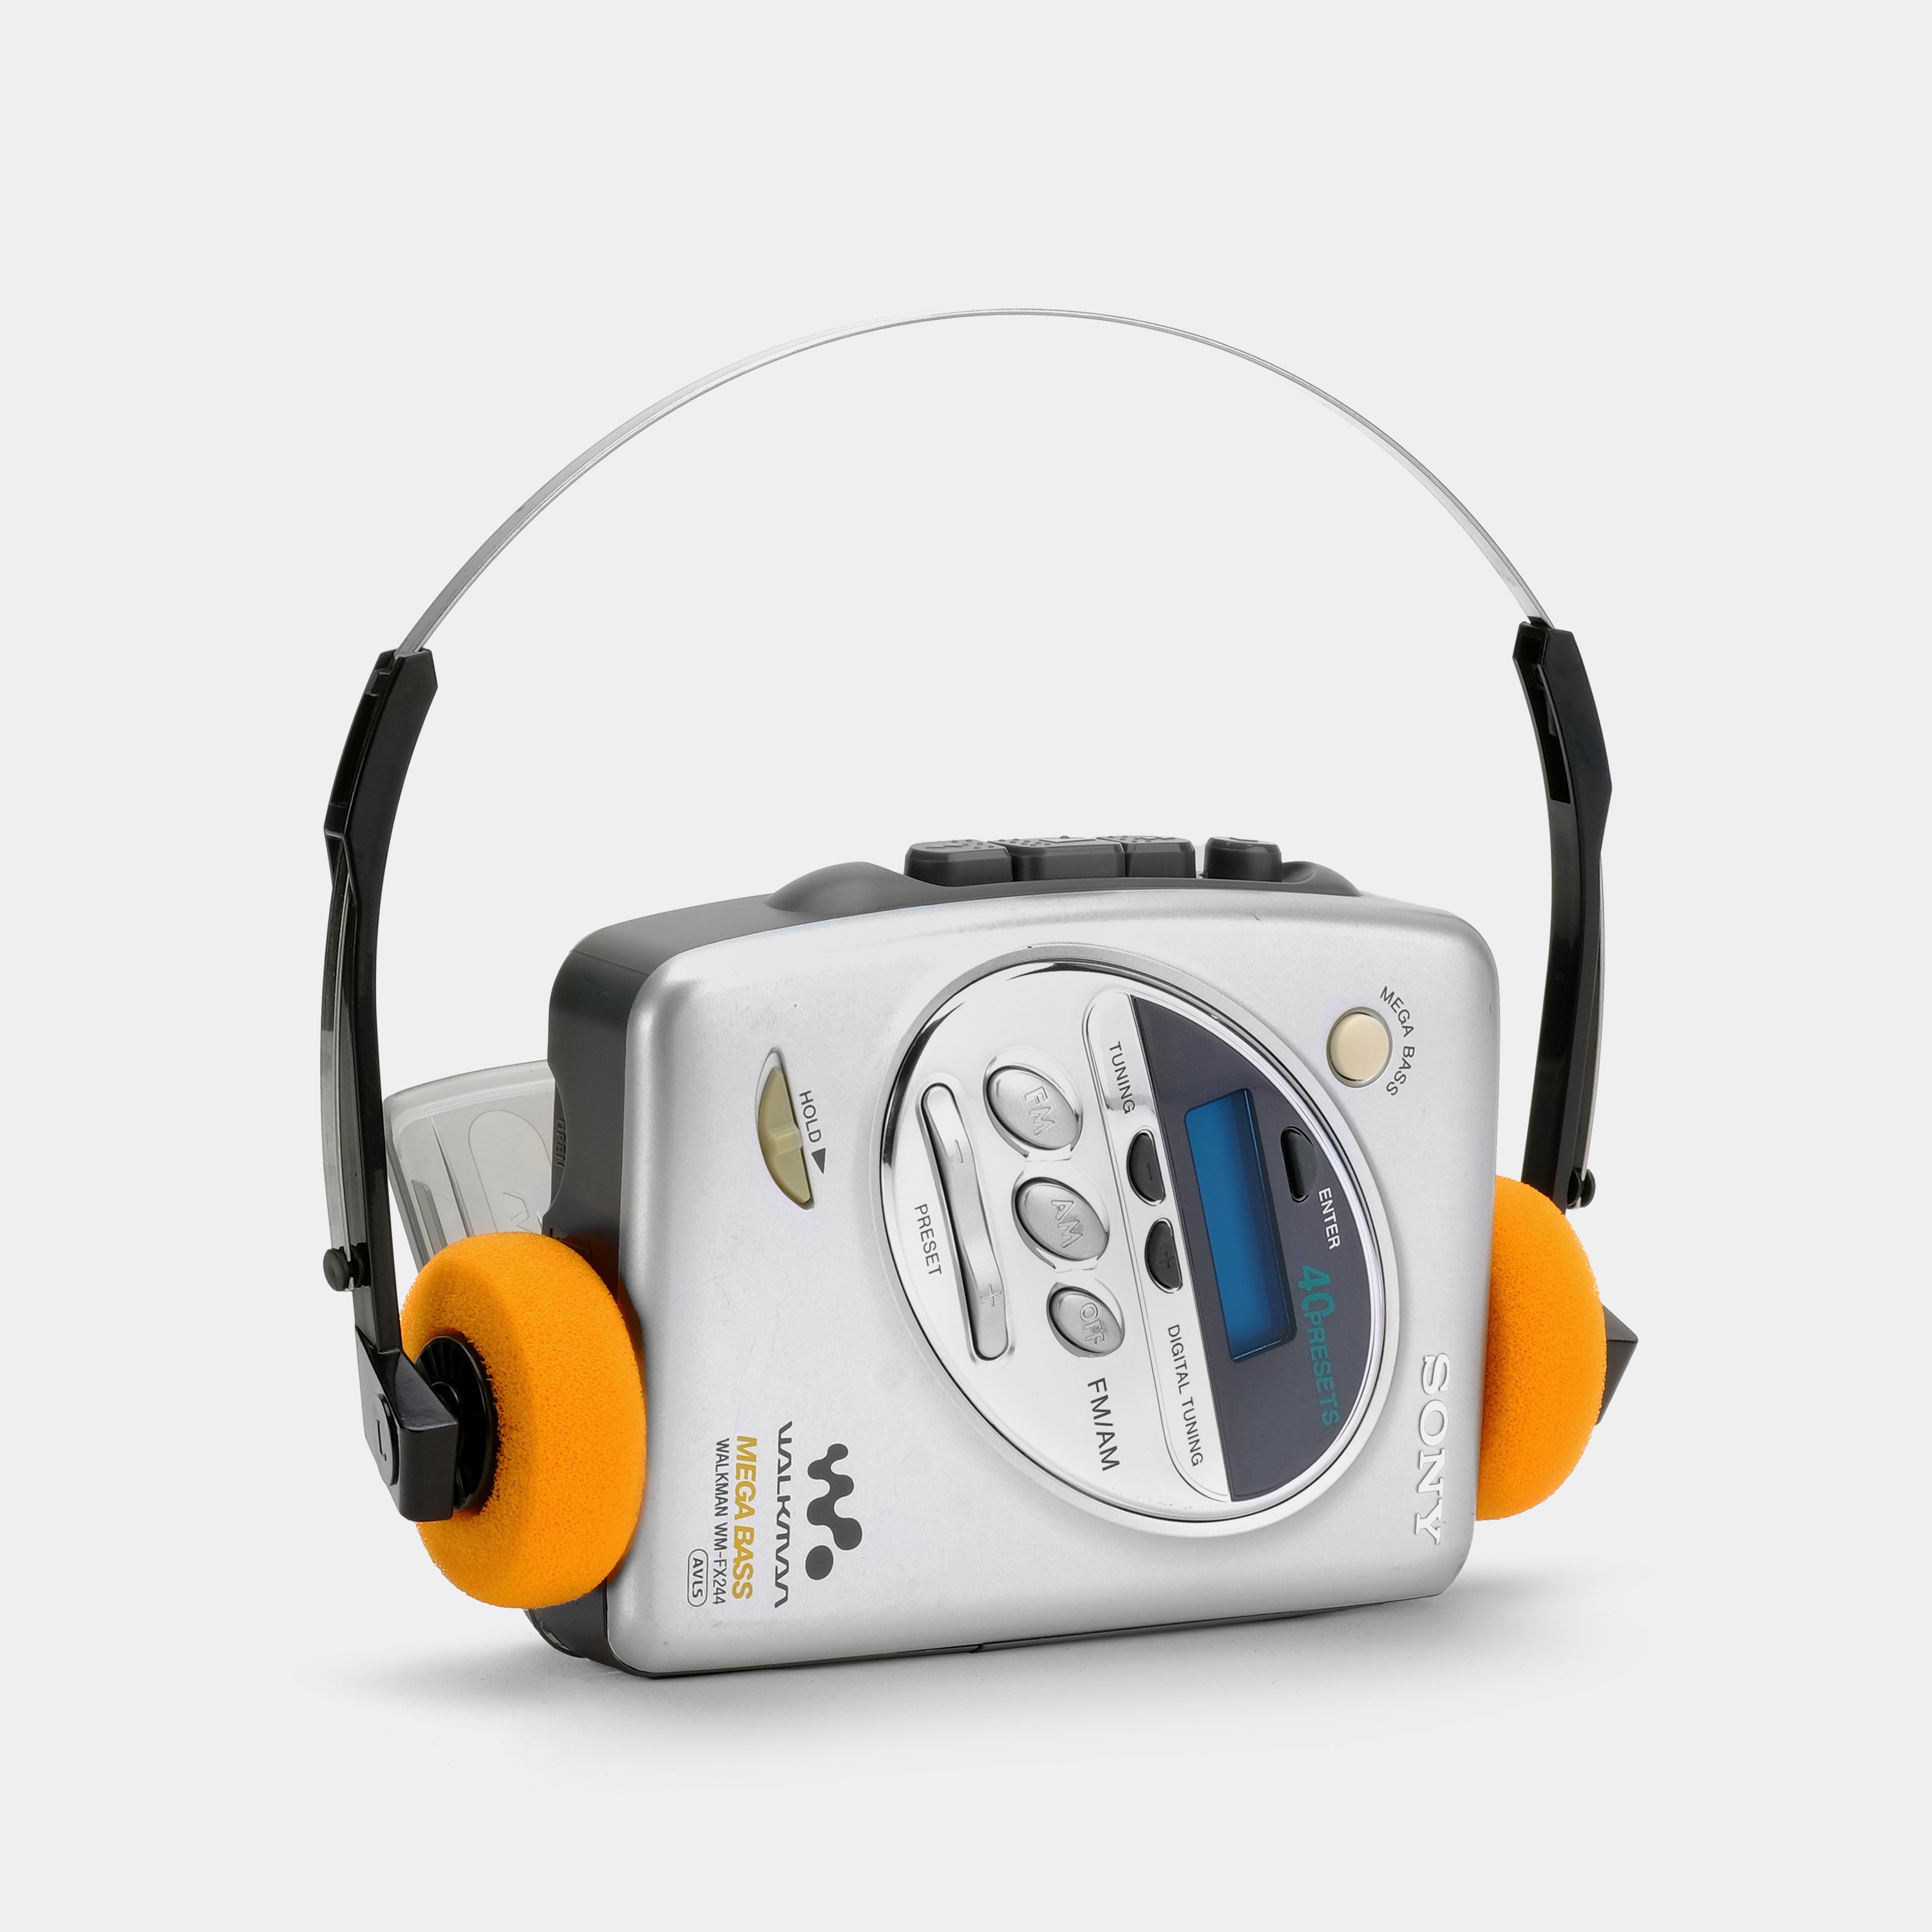 Sony Walkman WM-FX244 AM/FM Portable Cassette Player